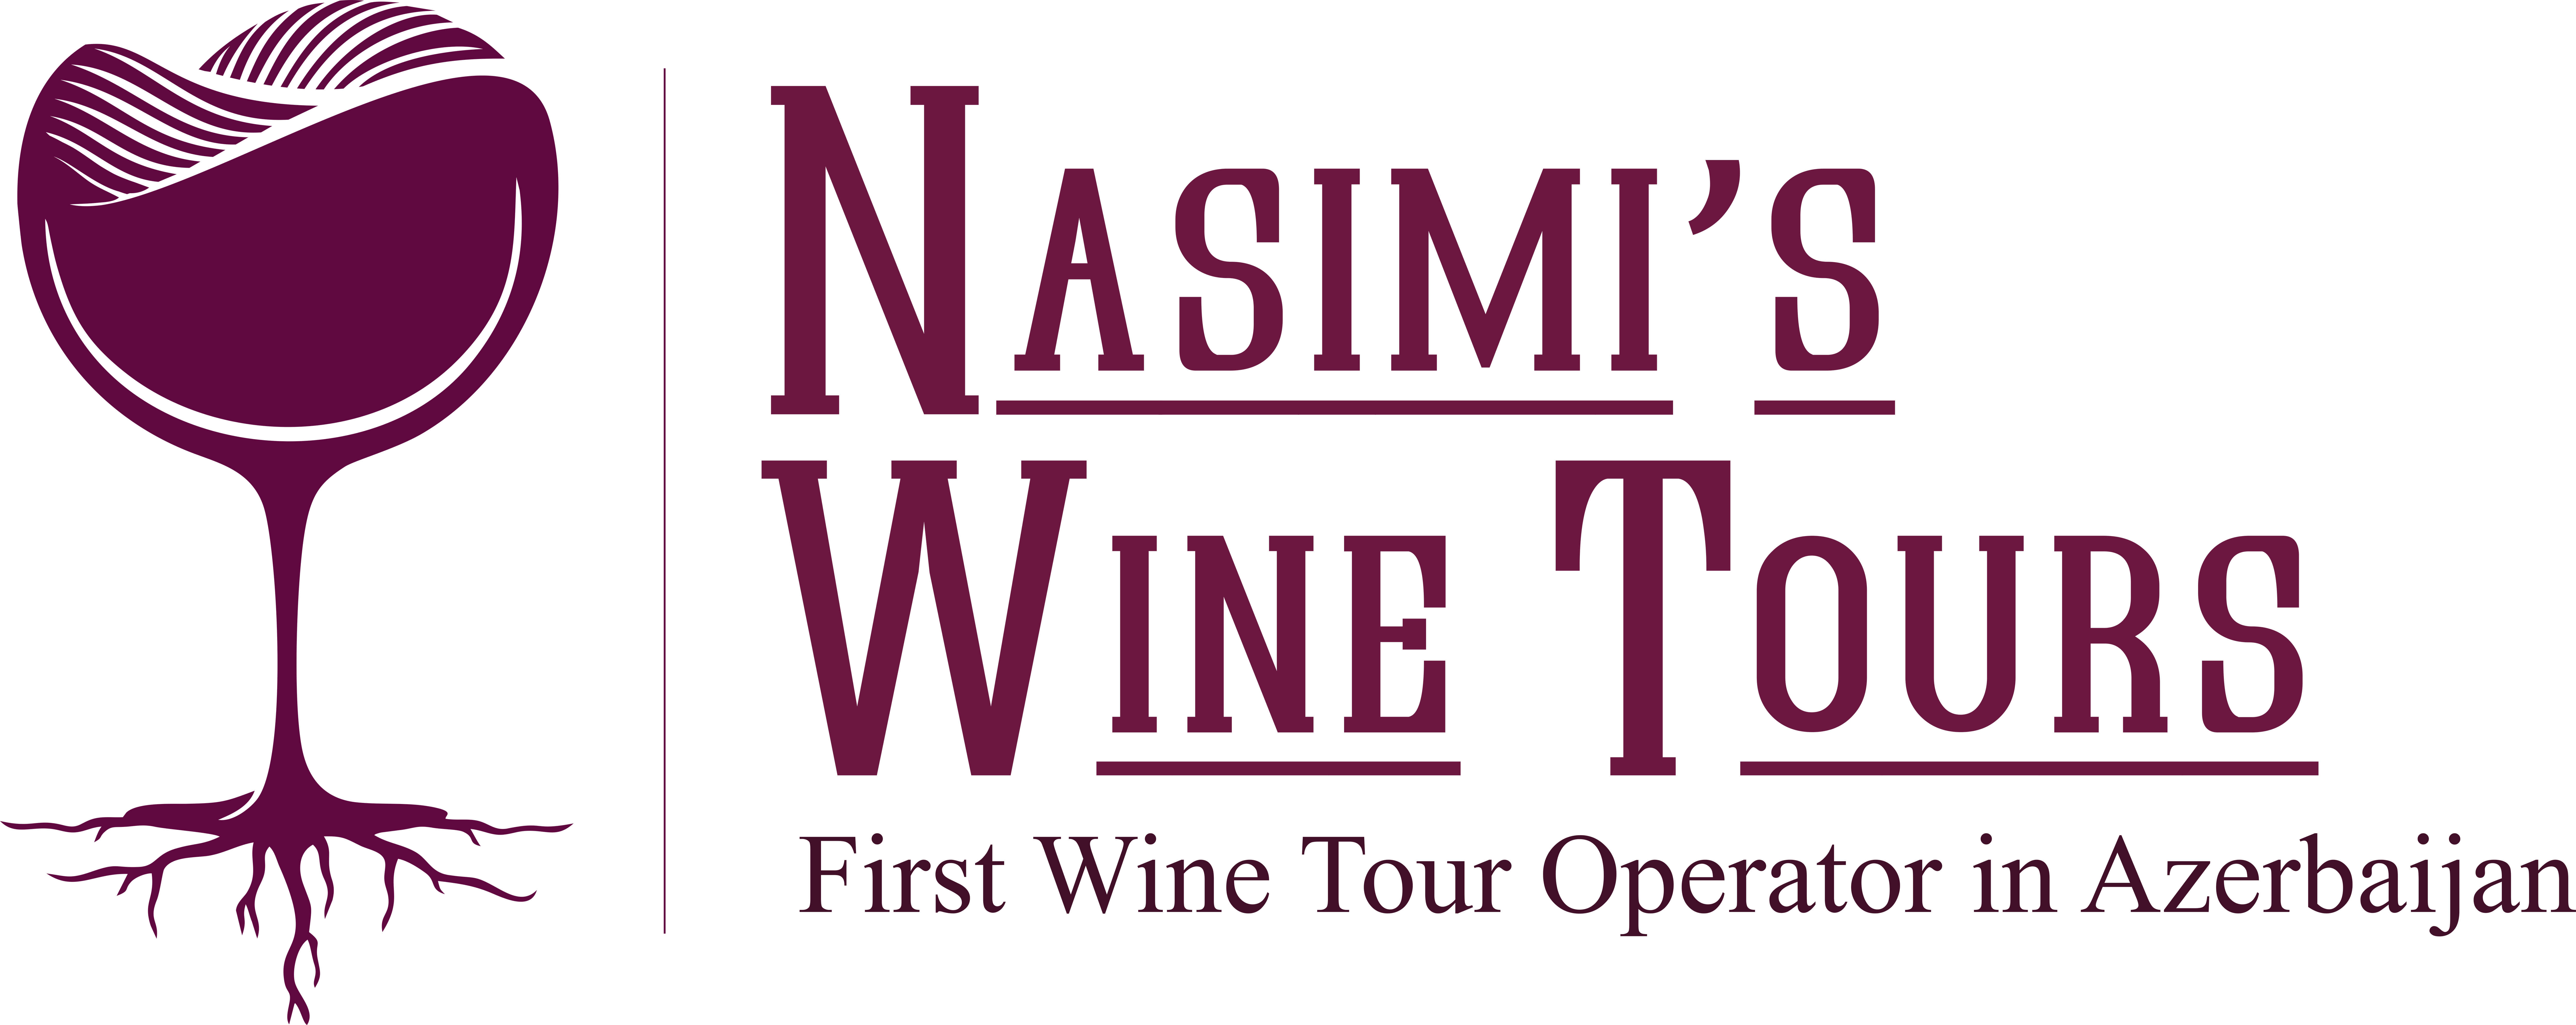 wine tours logo